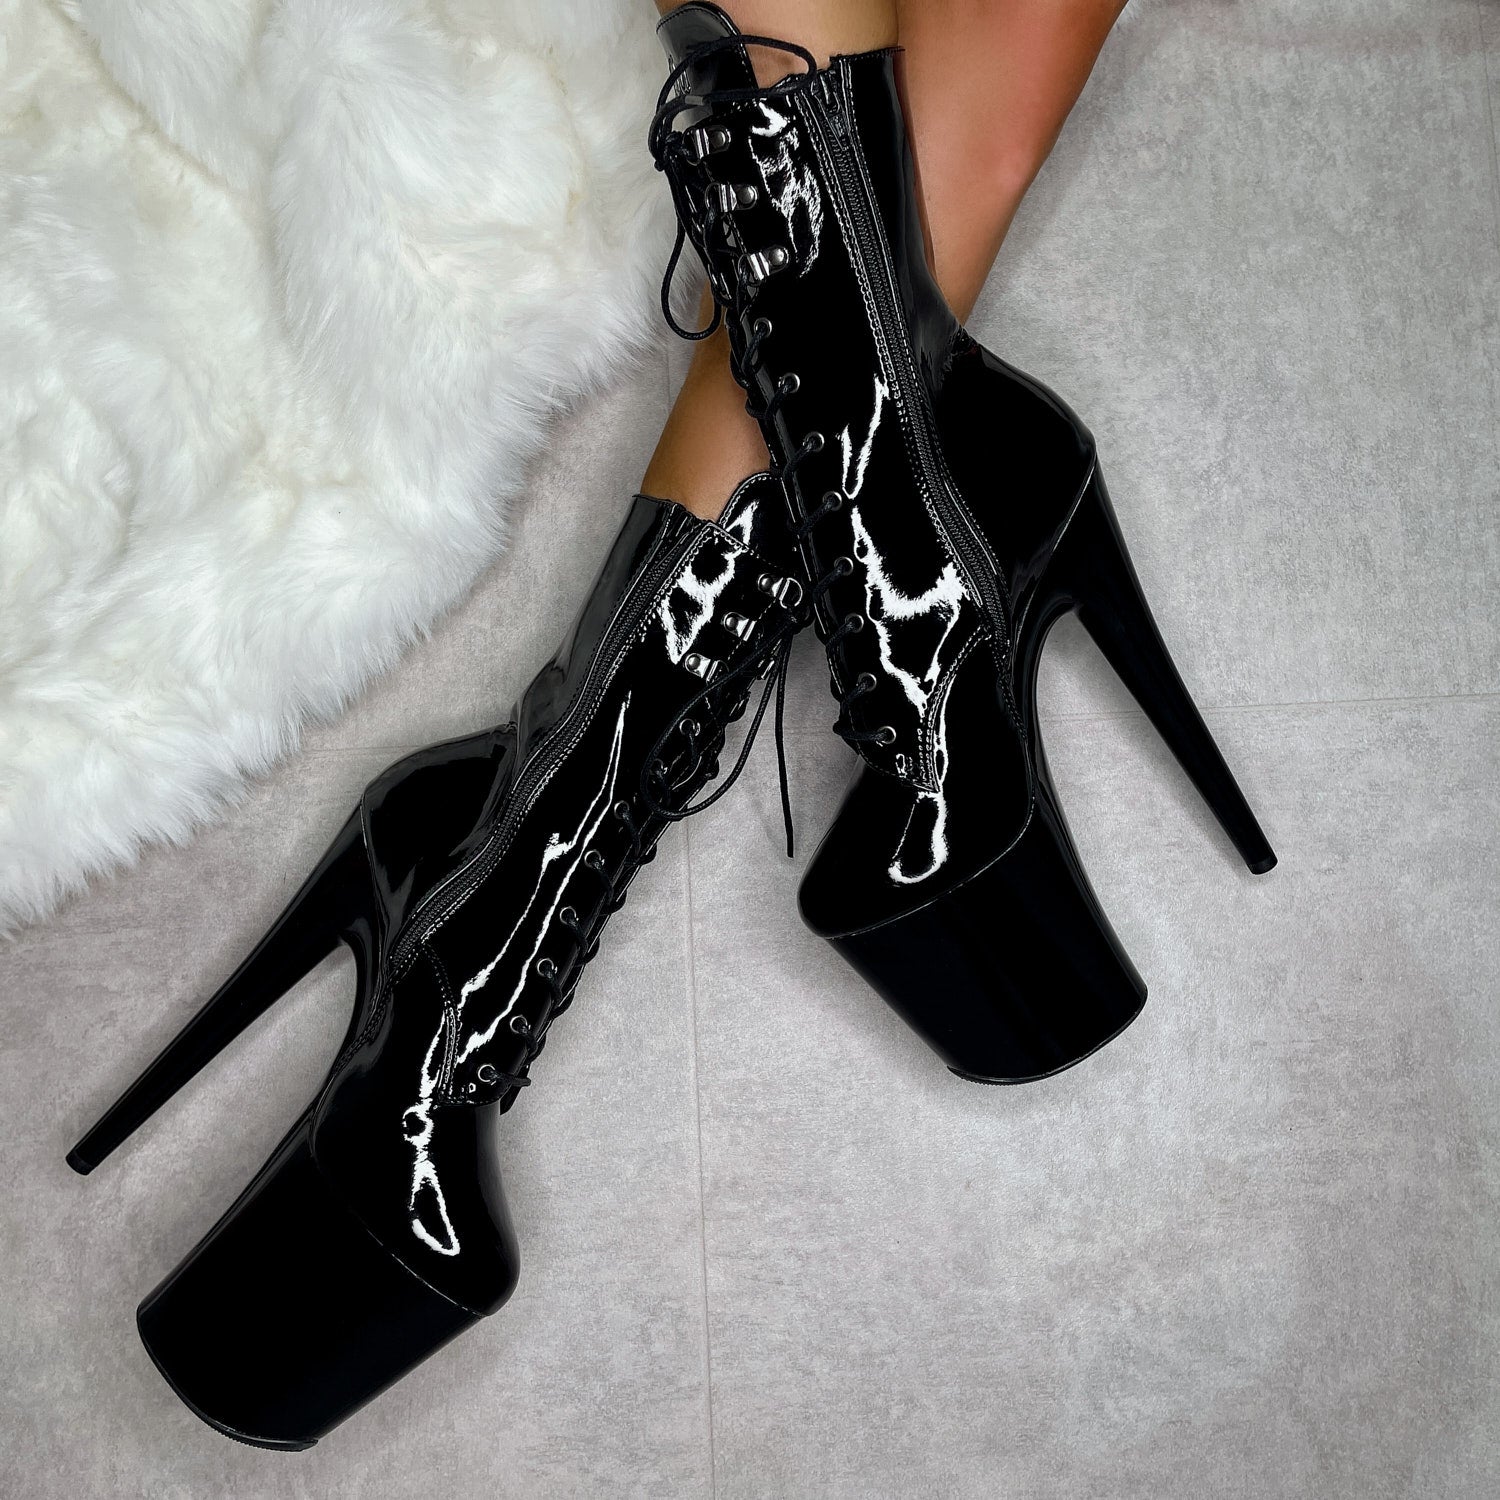 Black Beatle - Boot - 8 INCH, stripper shoe, stripper heel, pole heel, not a pleaser, platform, dancer, pole dance, floor work